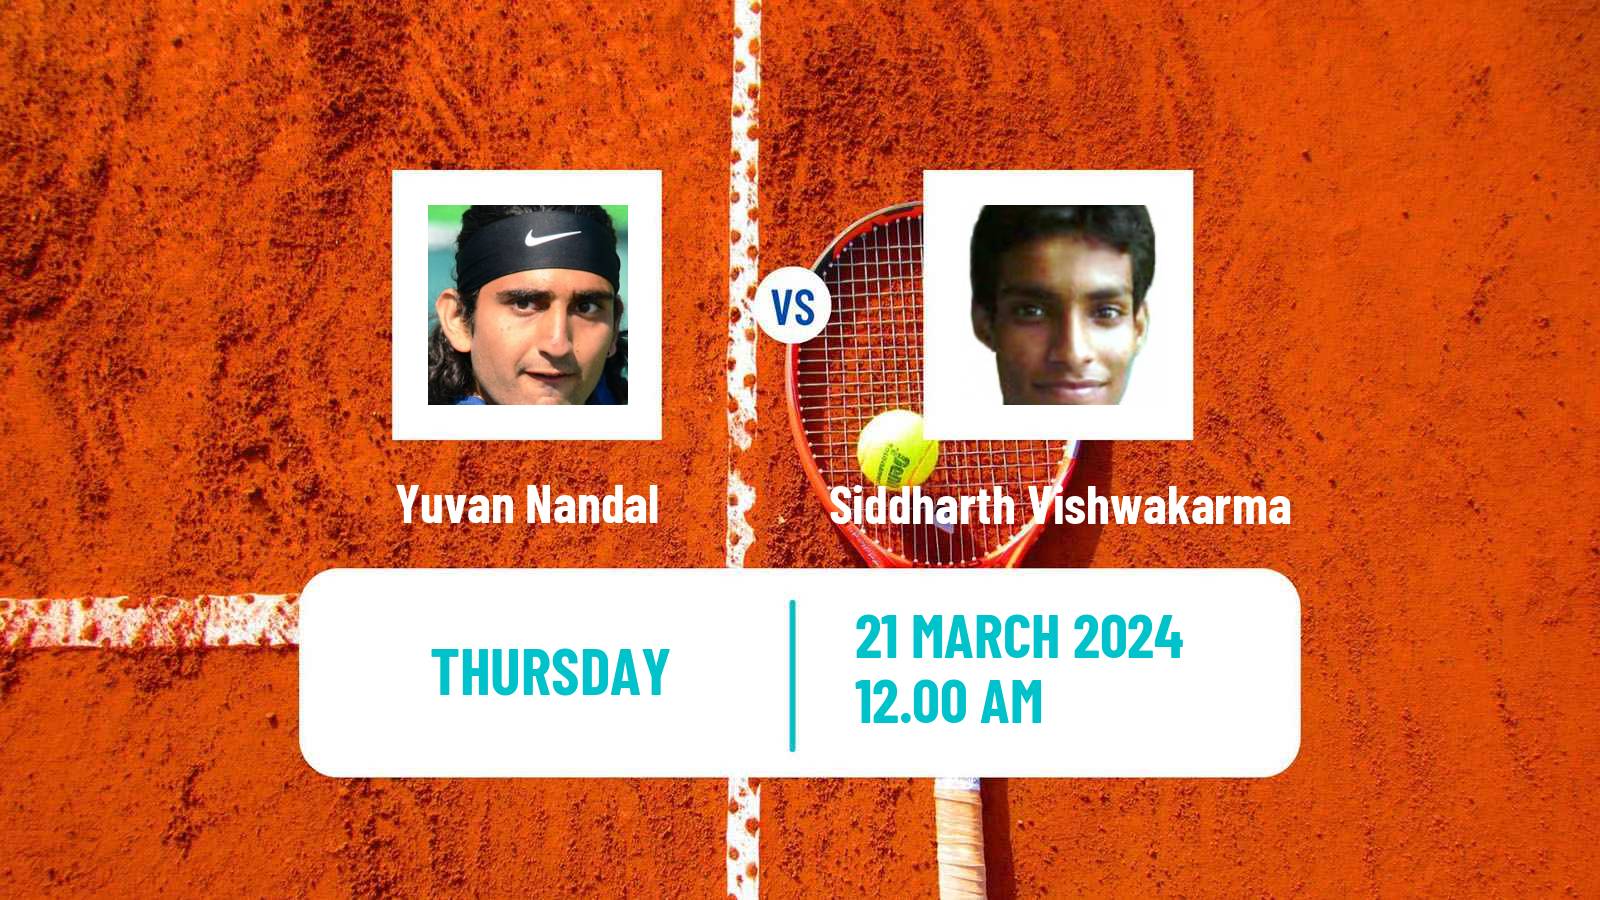 Tennis ITF M15 Chandigarh Men Yuvan Nandal - Siddharth Vishwakarma